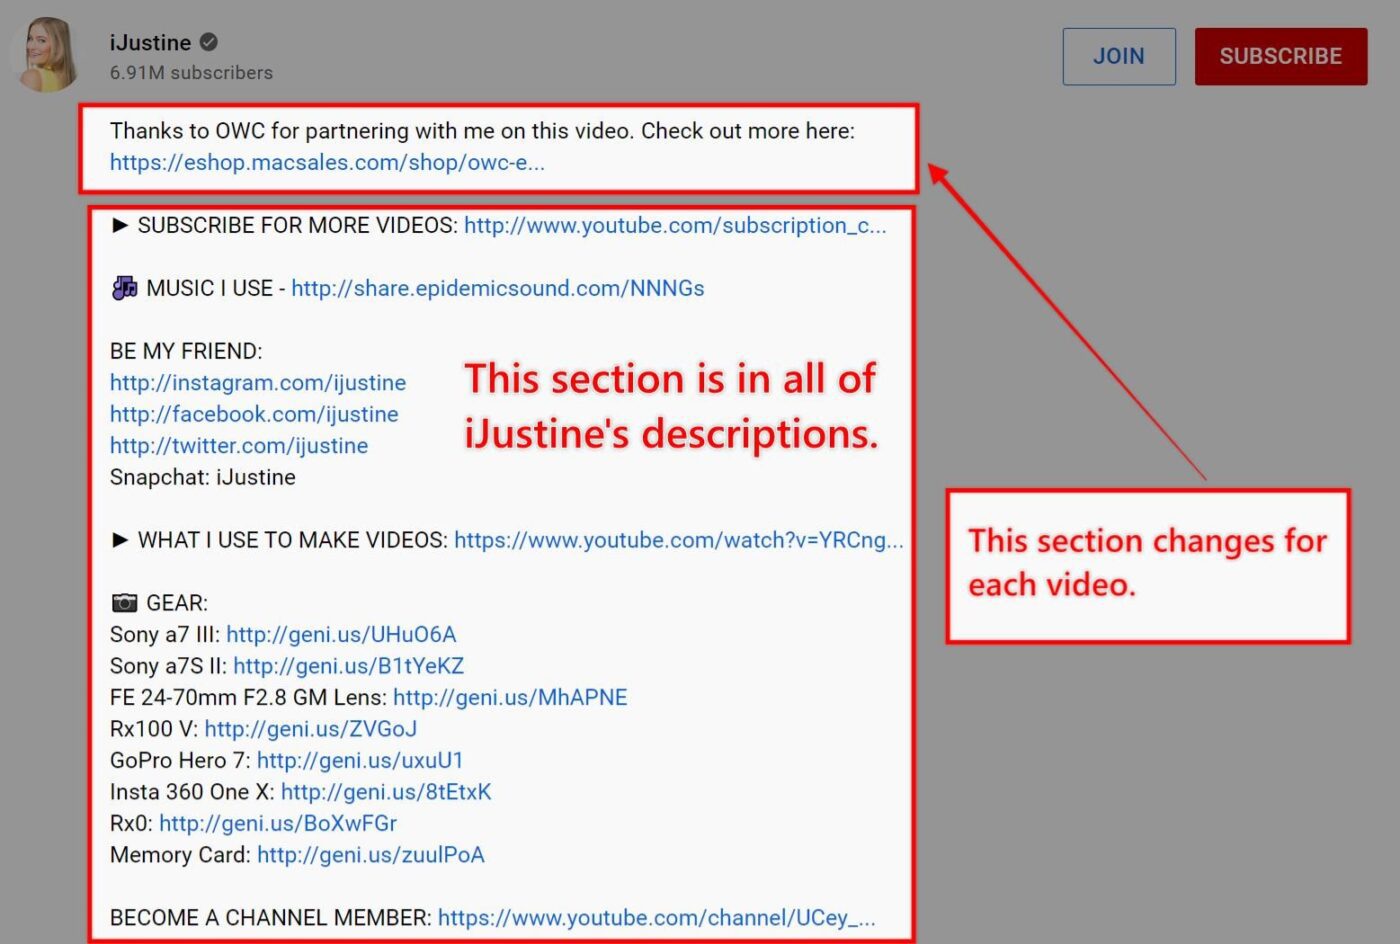 iJustine's YouTube video description